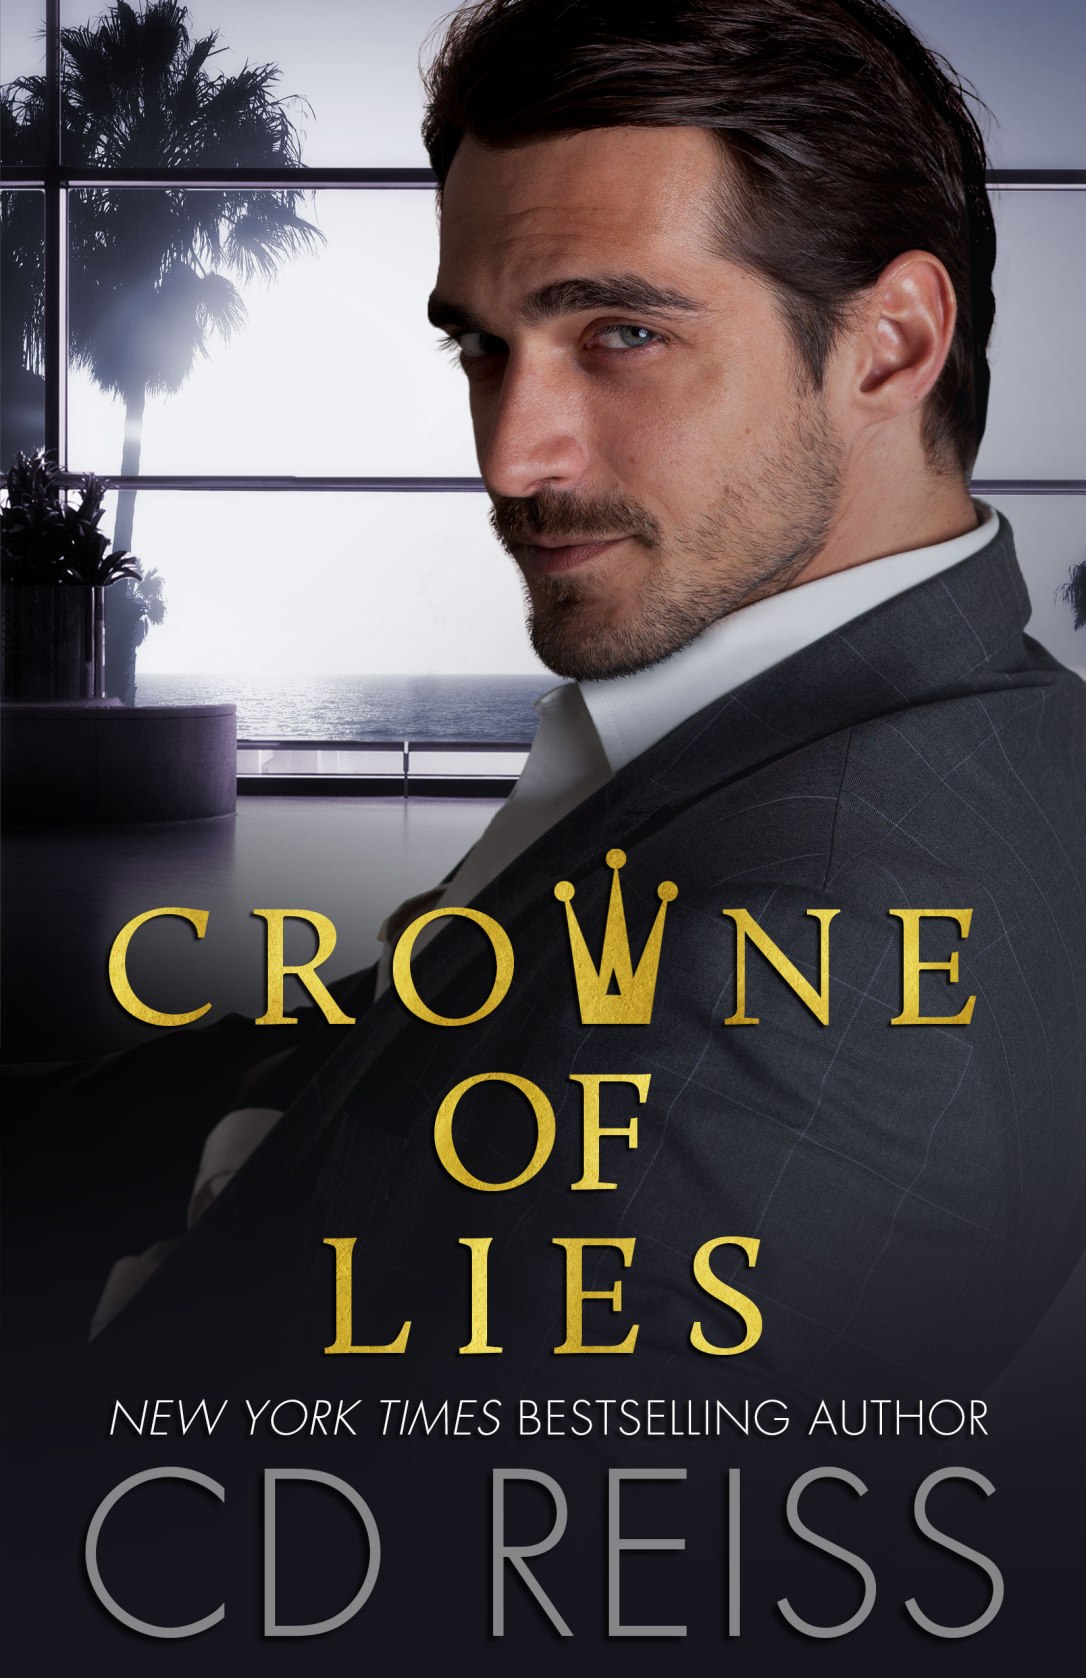 Crowne-of-Lies-cover-FULLRES